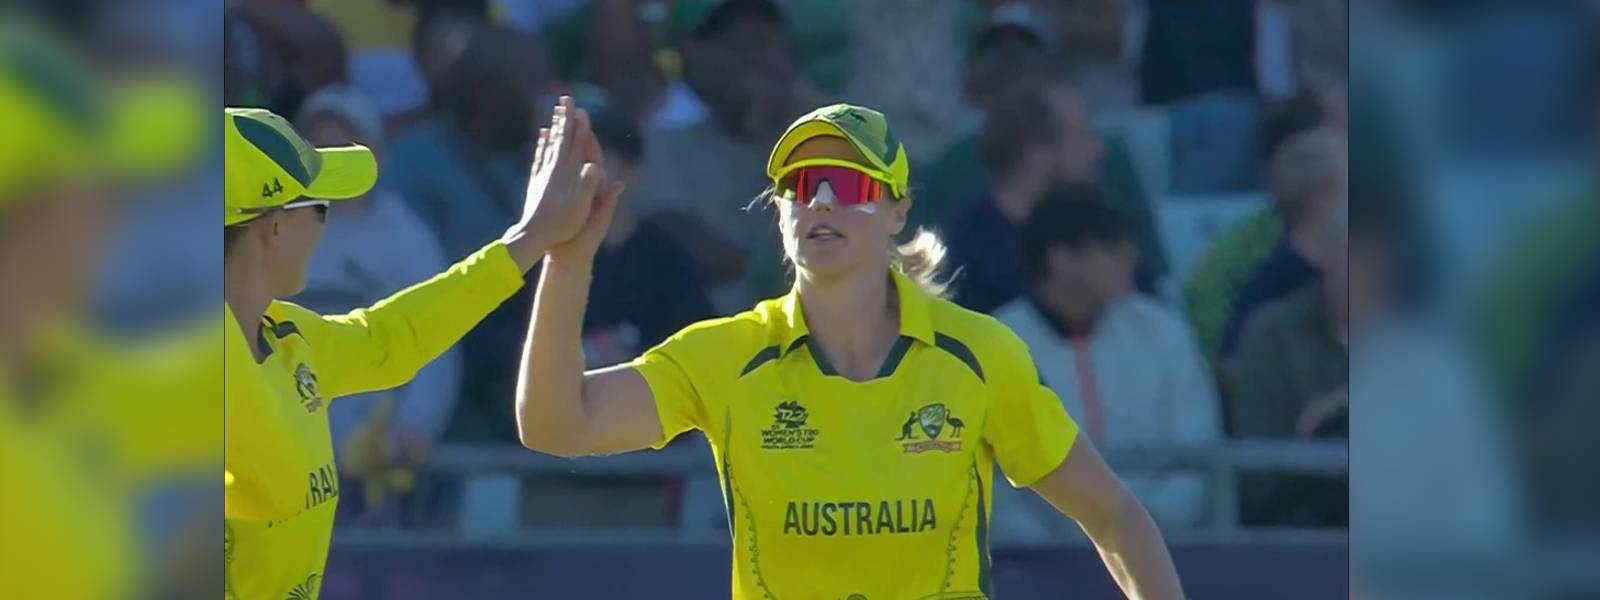 Australia crowned Women's T20 World Champions